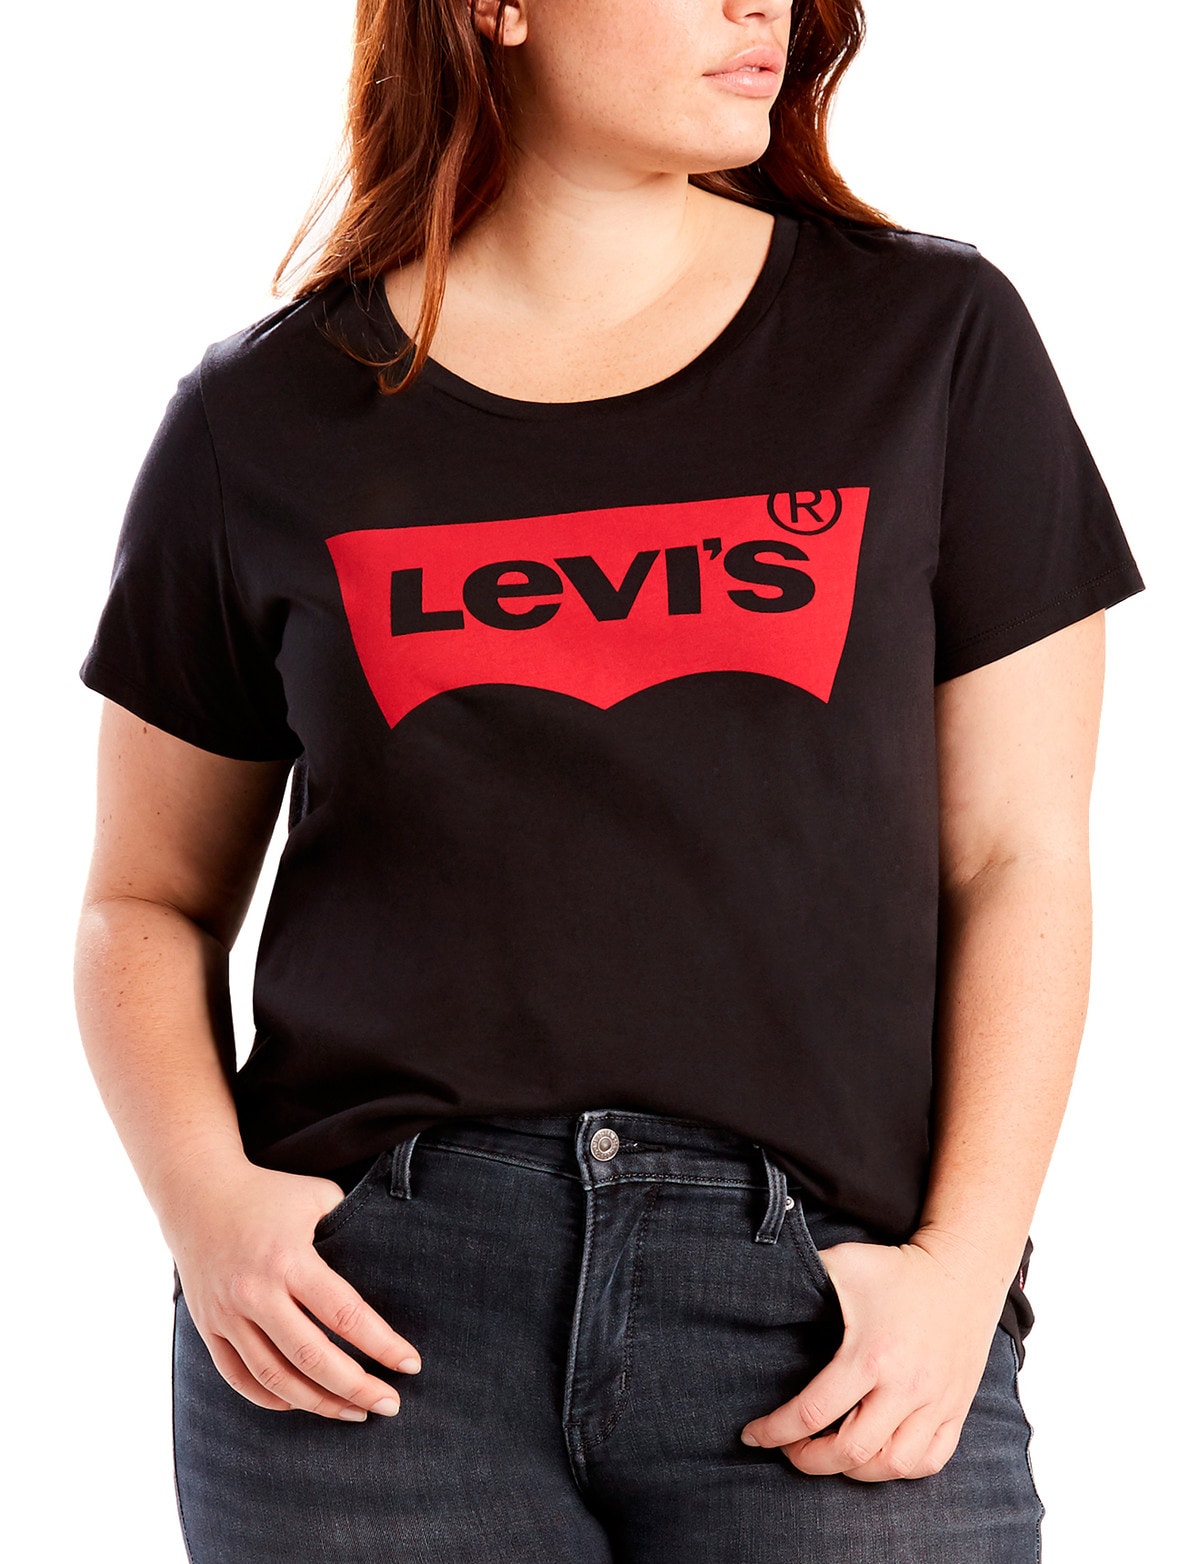 Levis Plus Crew Neck Short-Sleeve T-Shirt, Black - Tops